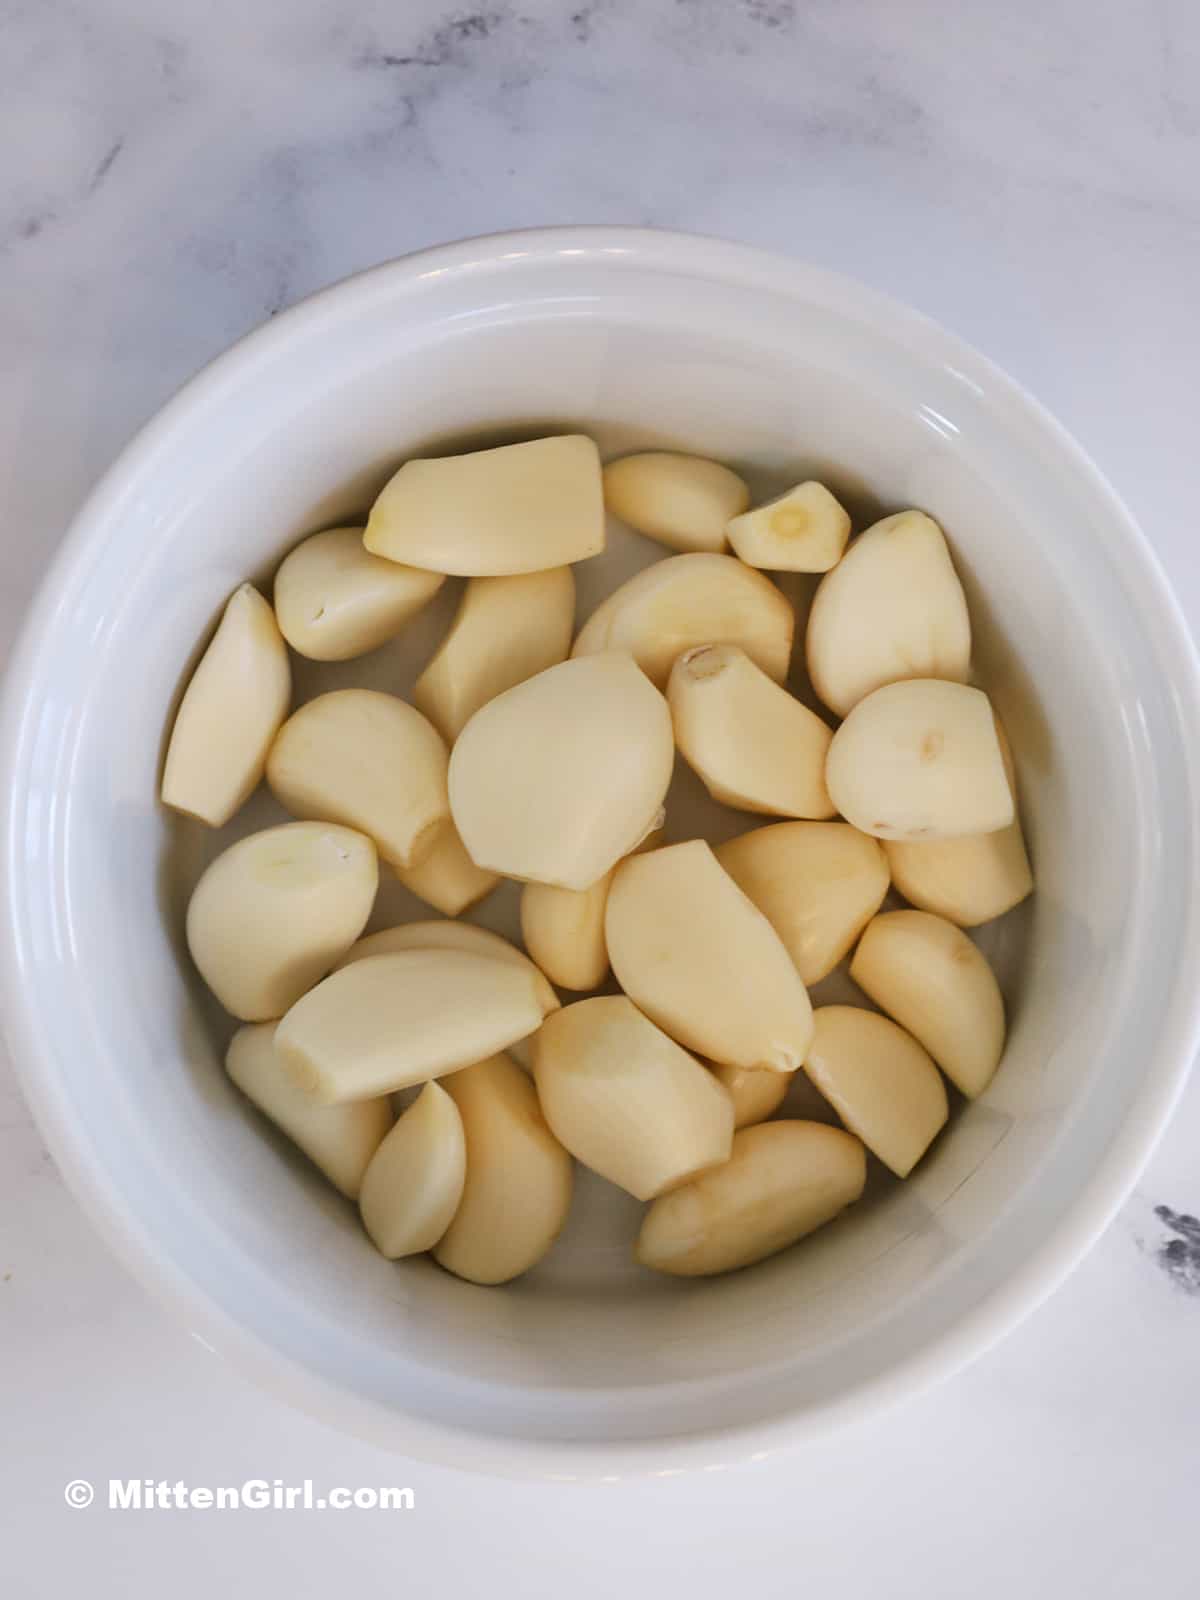 Peeled garlic in a baking dish.